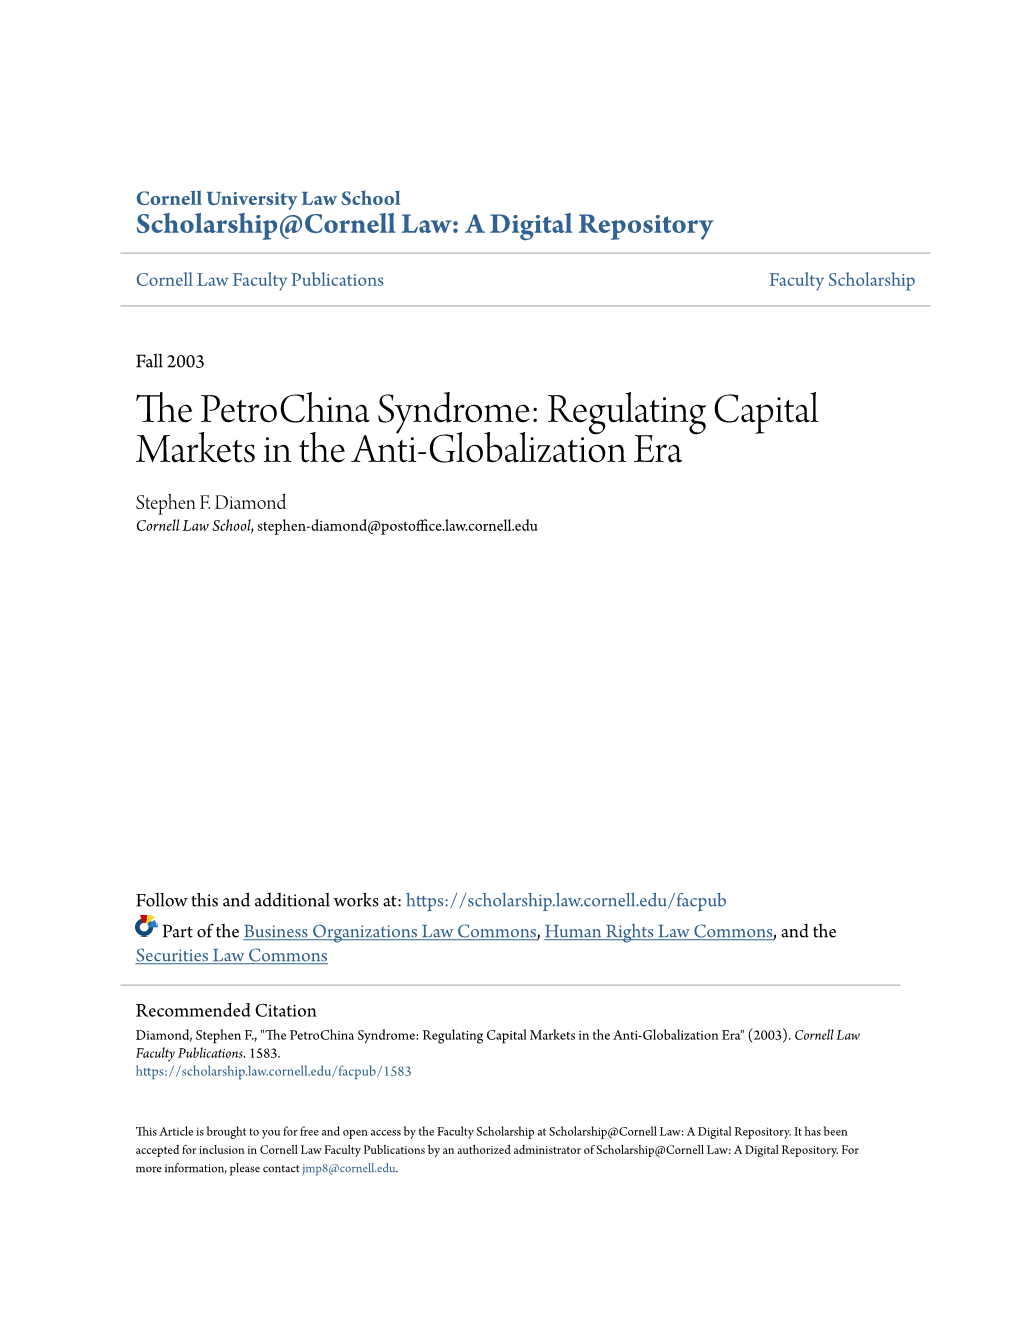 The Petrochina Syndrome: Regulating Capital Markets in the Anti-Globalization Era